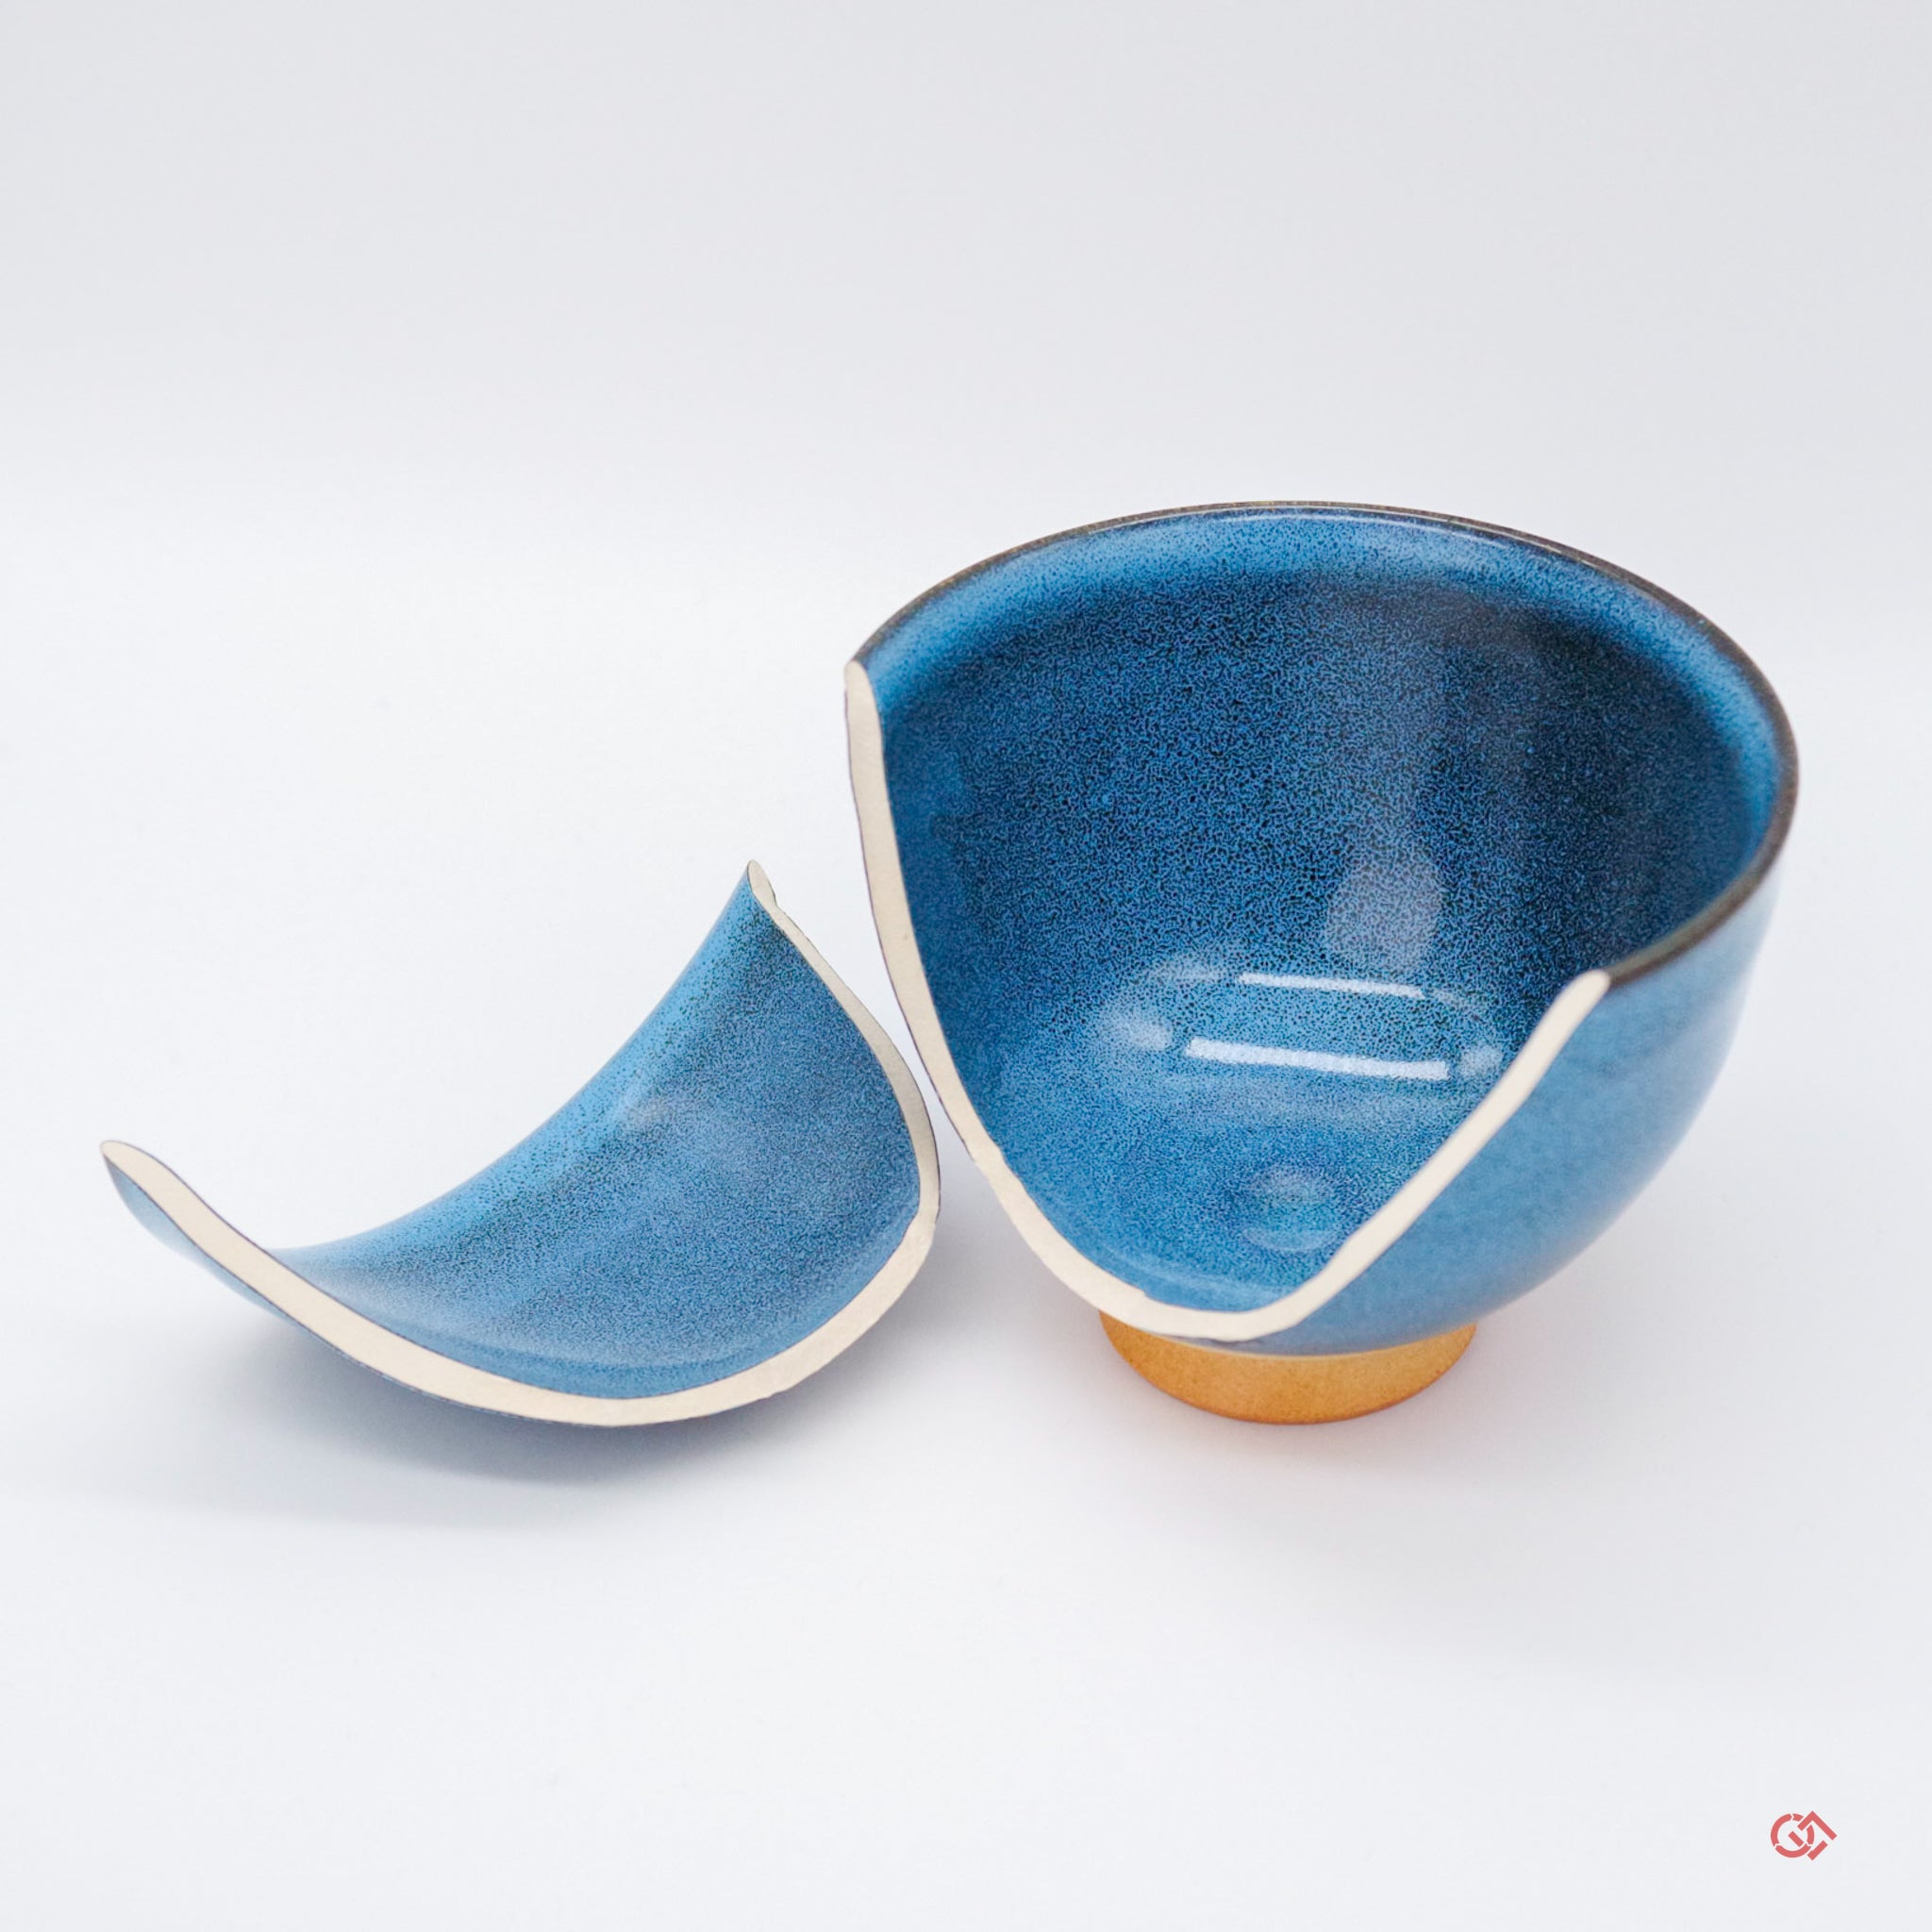 Japanese broken pottery